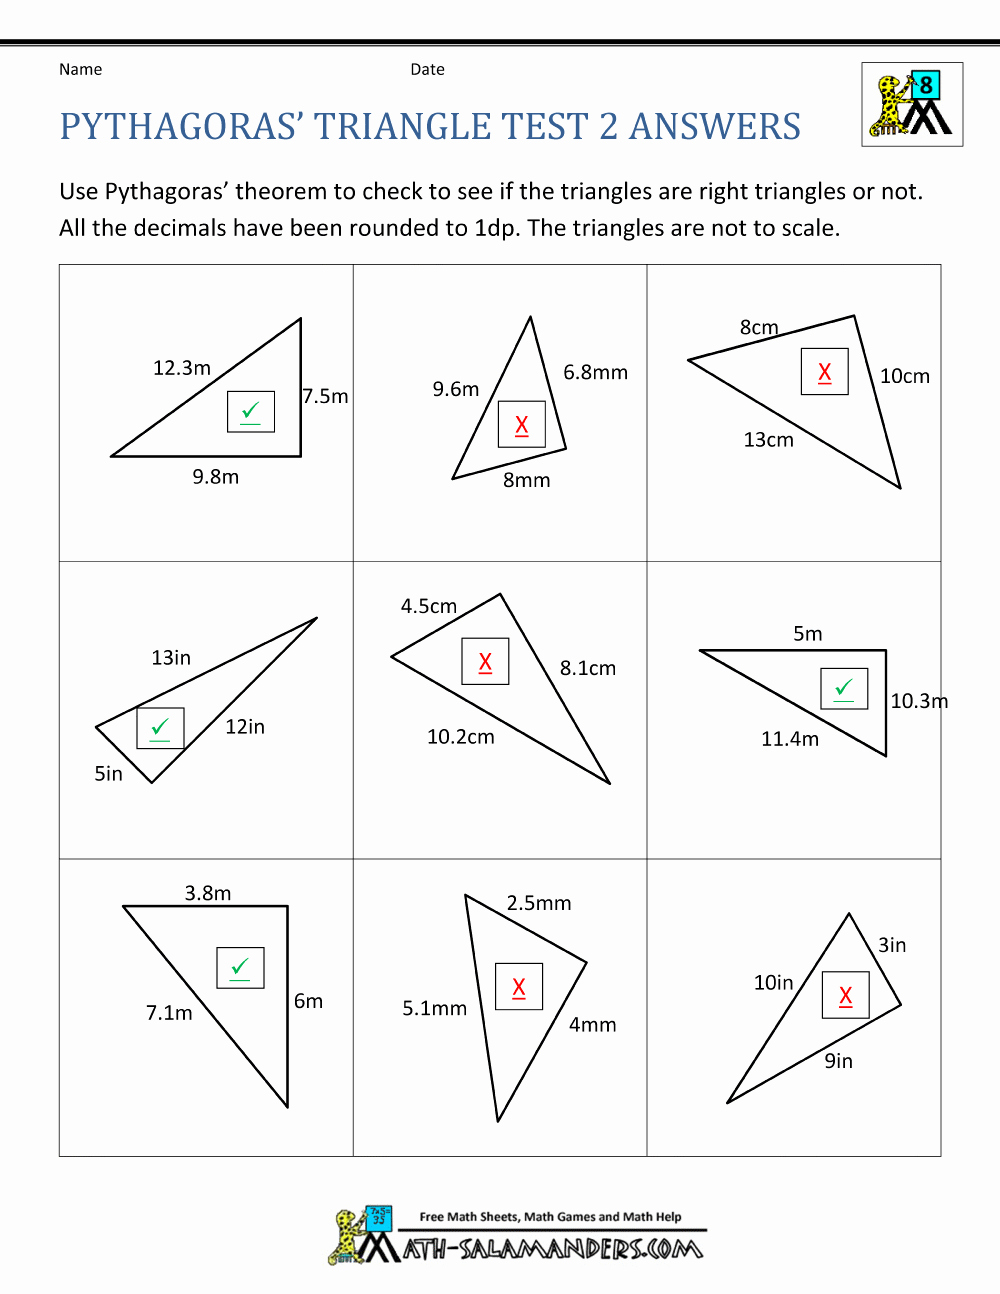 Pythagoras theorem Worksheet with Answers Fresh Pythagoras theorem Questions